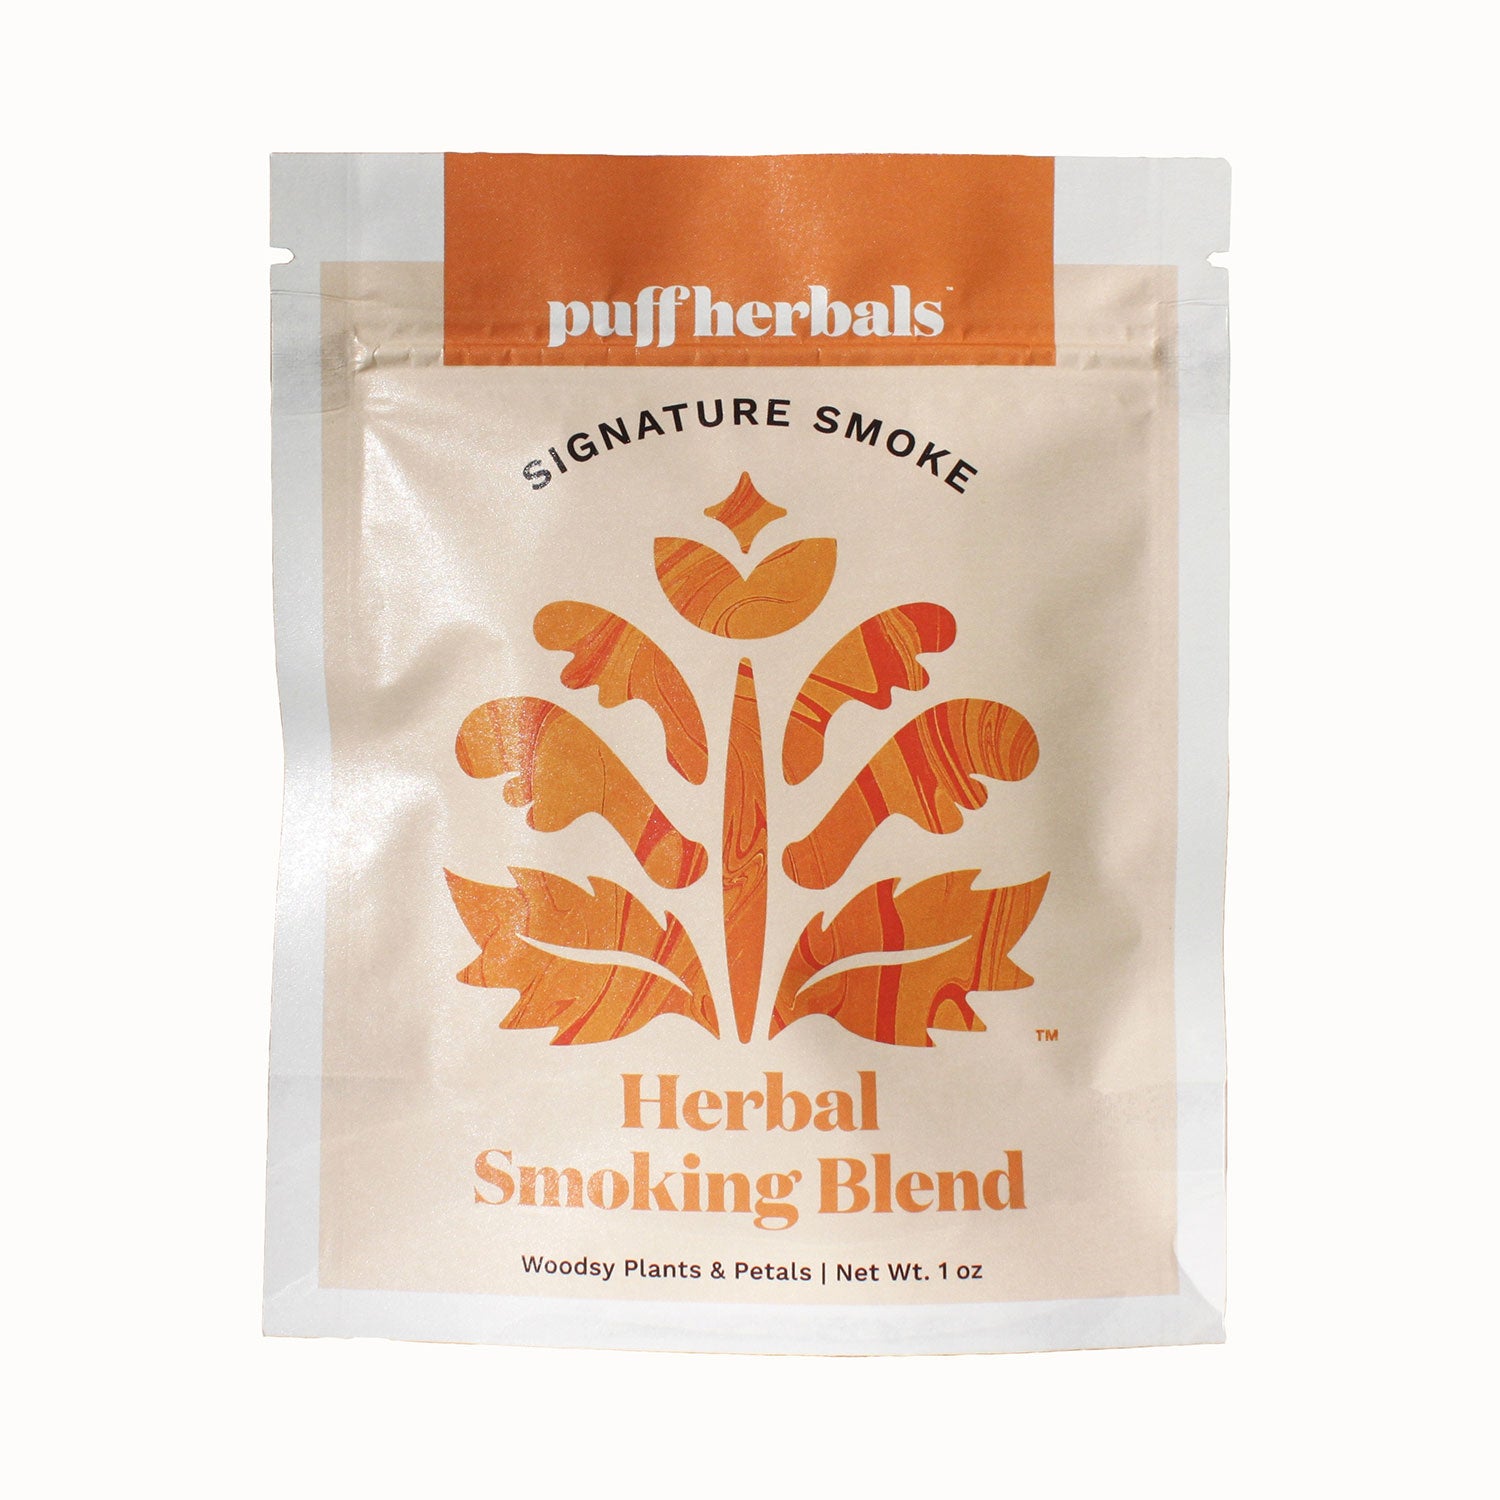 JOYHERBS Smoke Blend Herbal Smoking Mixture Herbal Smoking Blend with 100%  Natural Herbal Smoking Blend Smokable Herbs (1 oz/ 30g)